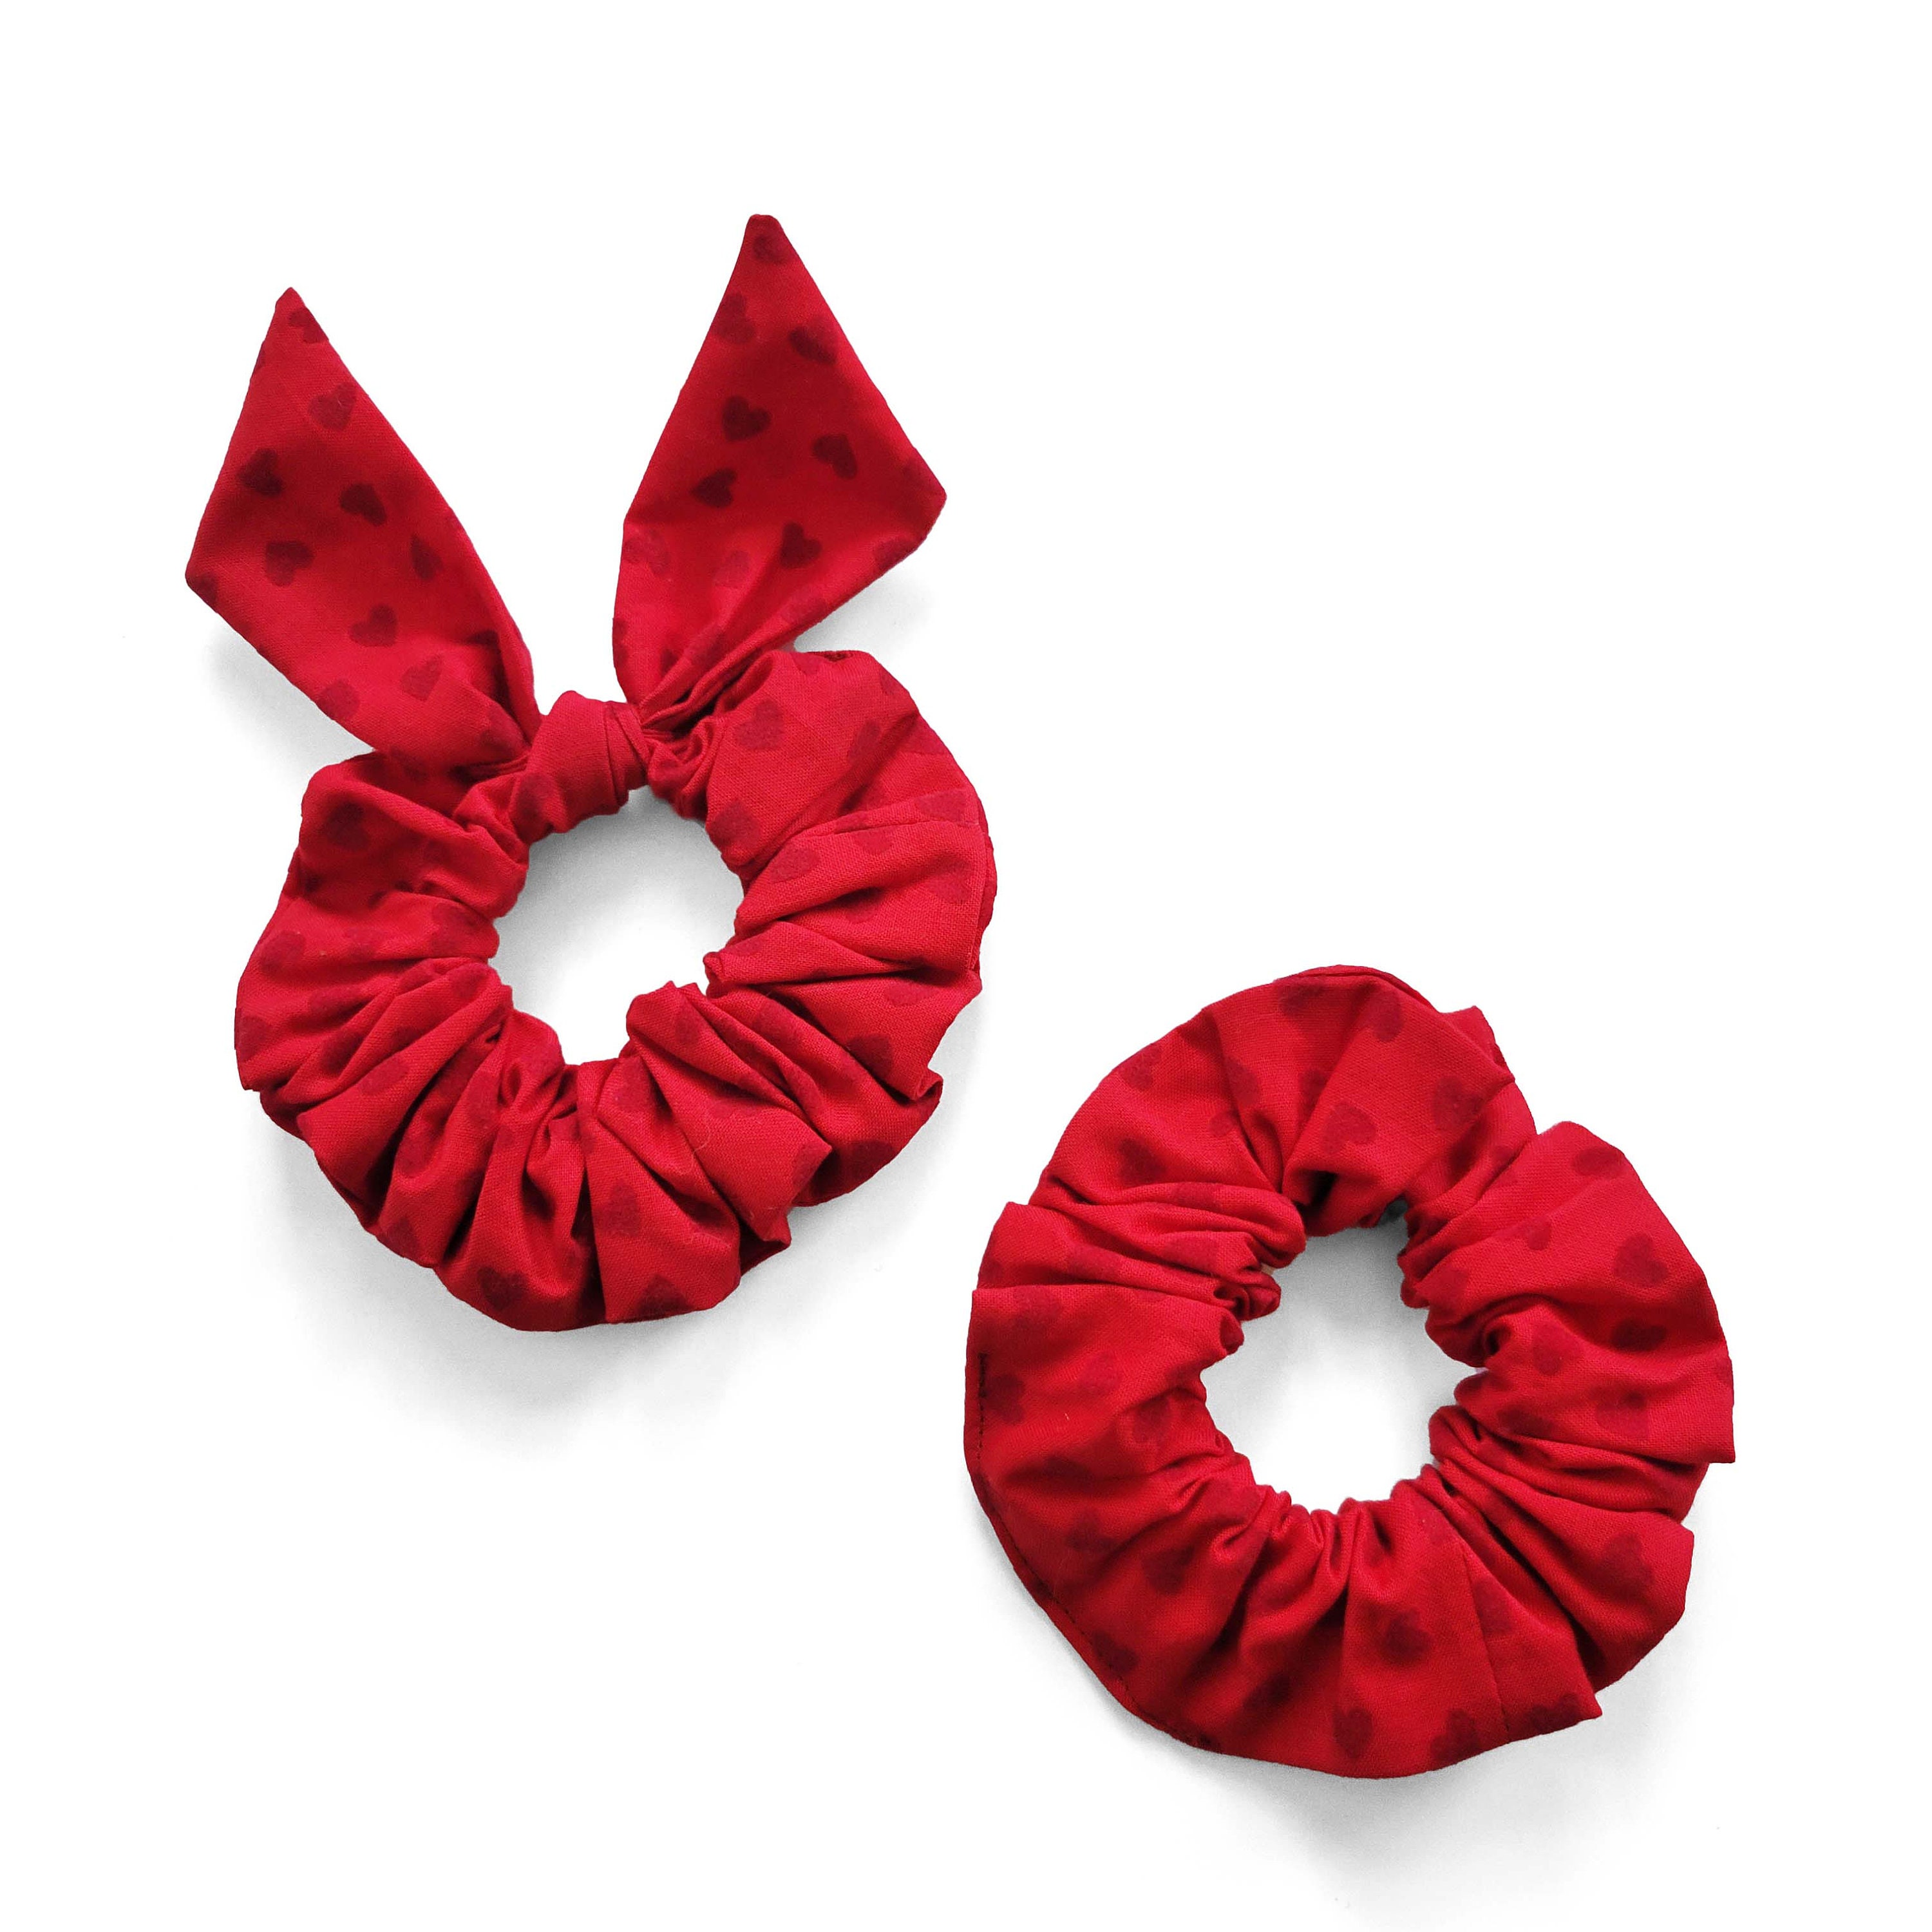 Red Hearts Valentines Day Scrunchies - Scrunchies - Scrunchy - Hair Ties -  Hair Accessories - Handmade in Texas